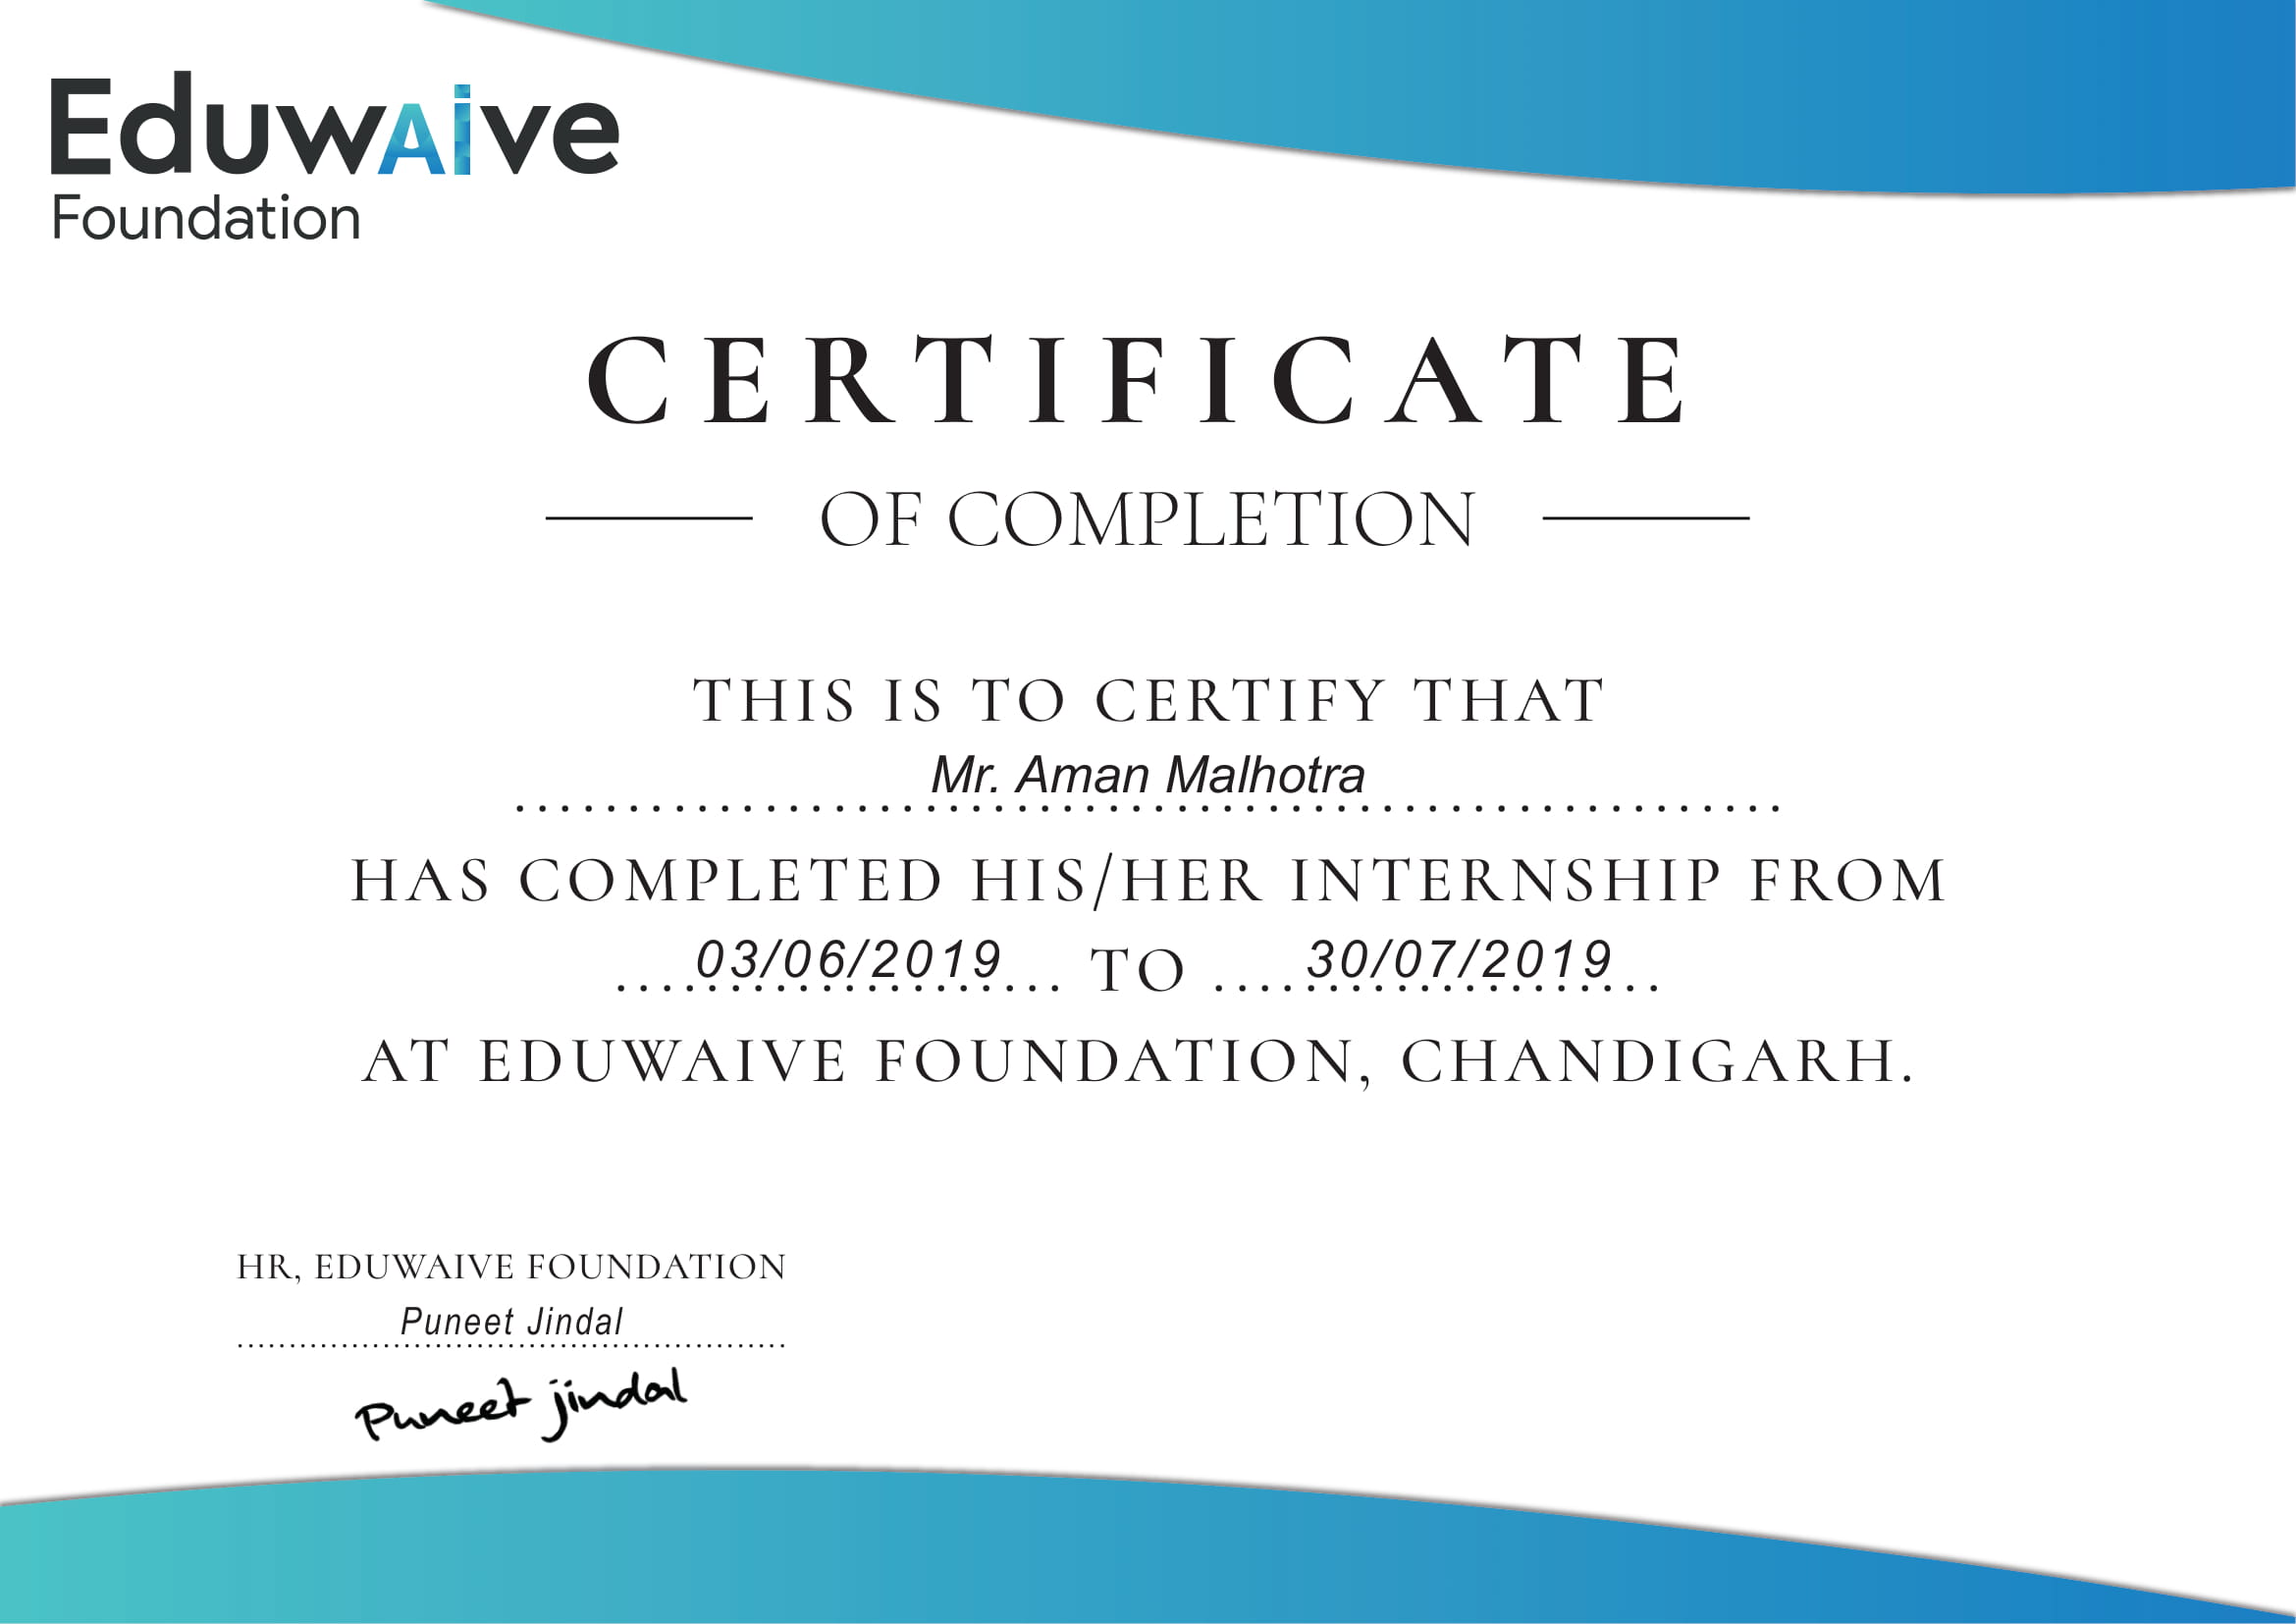 Eduwaive Foundation